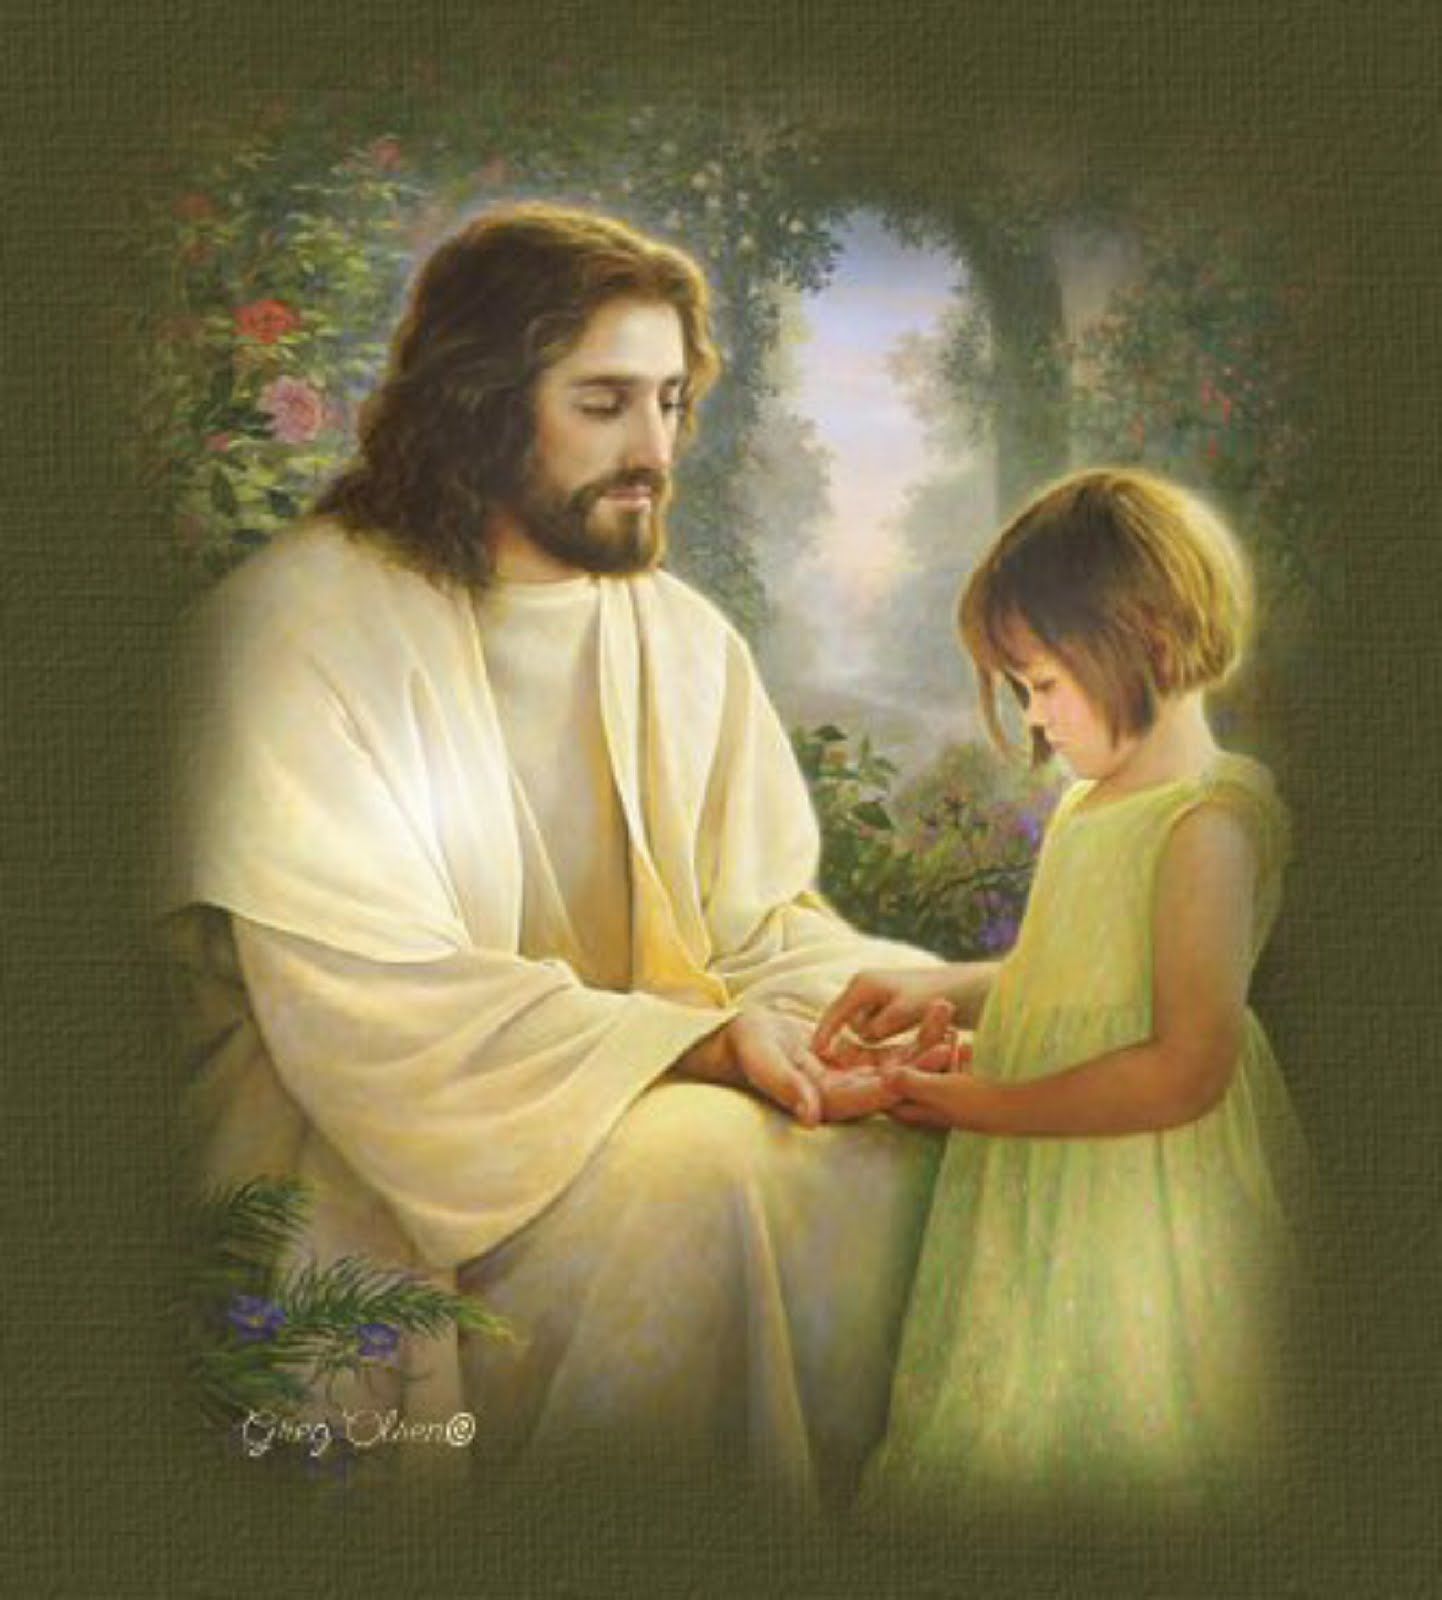 King Wallpaper.com. Jesus photo, Jesus image, Jesus picture